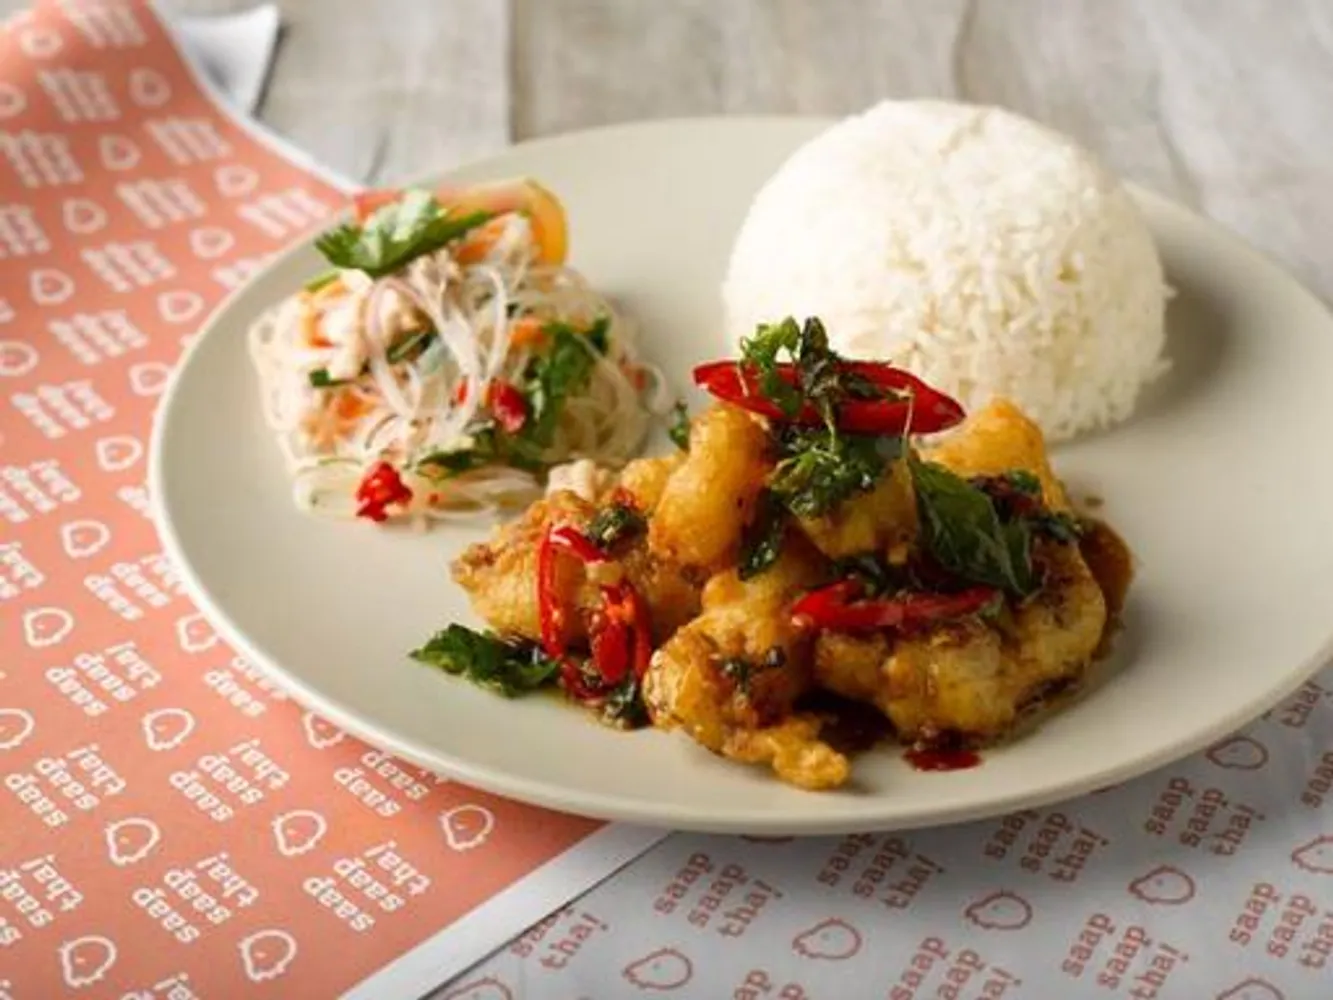 R6 Kra Pao Basil Crispy Fish with Rice